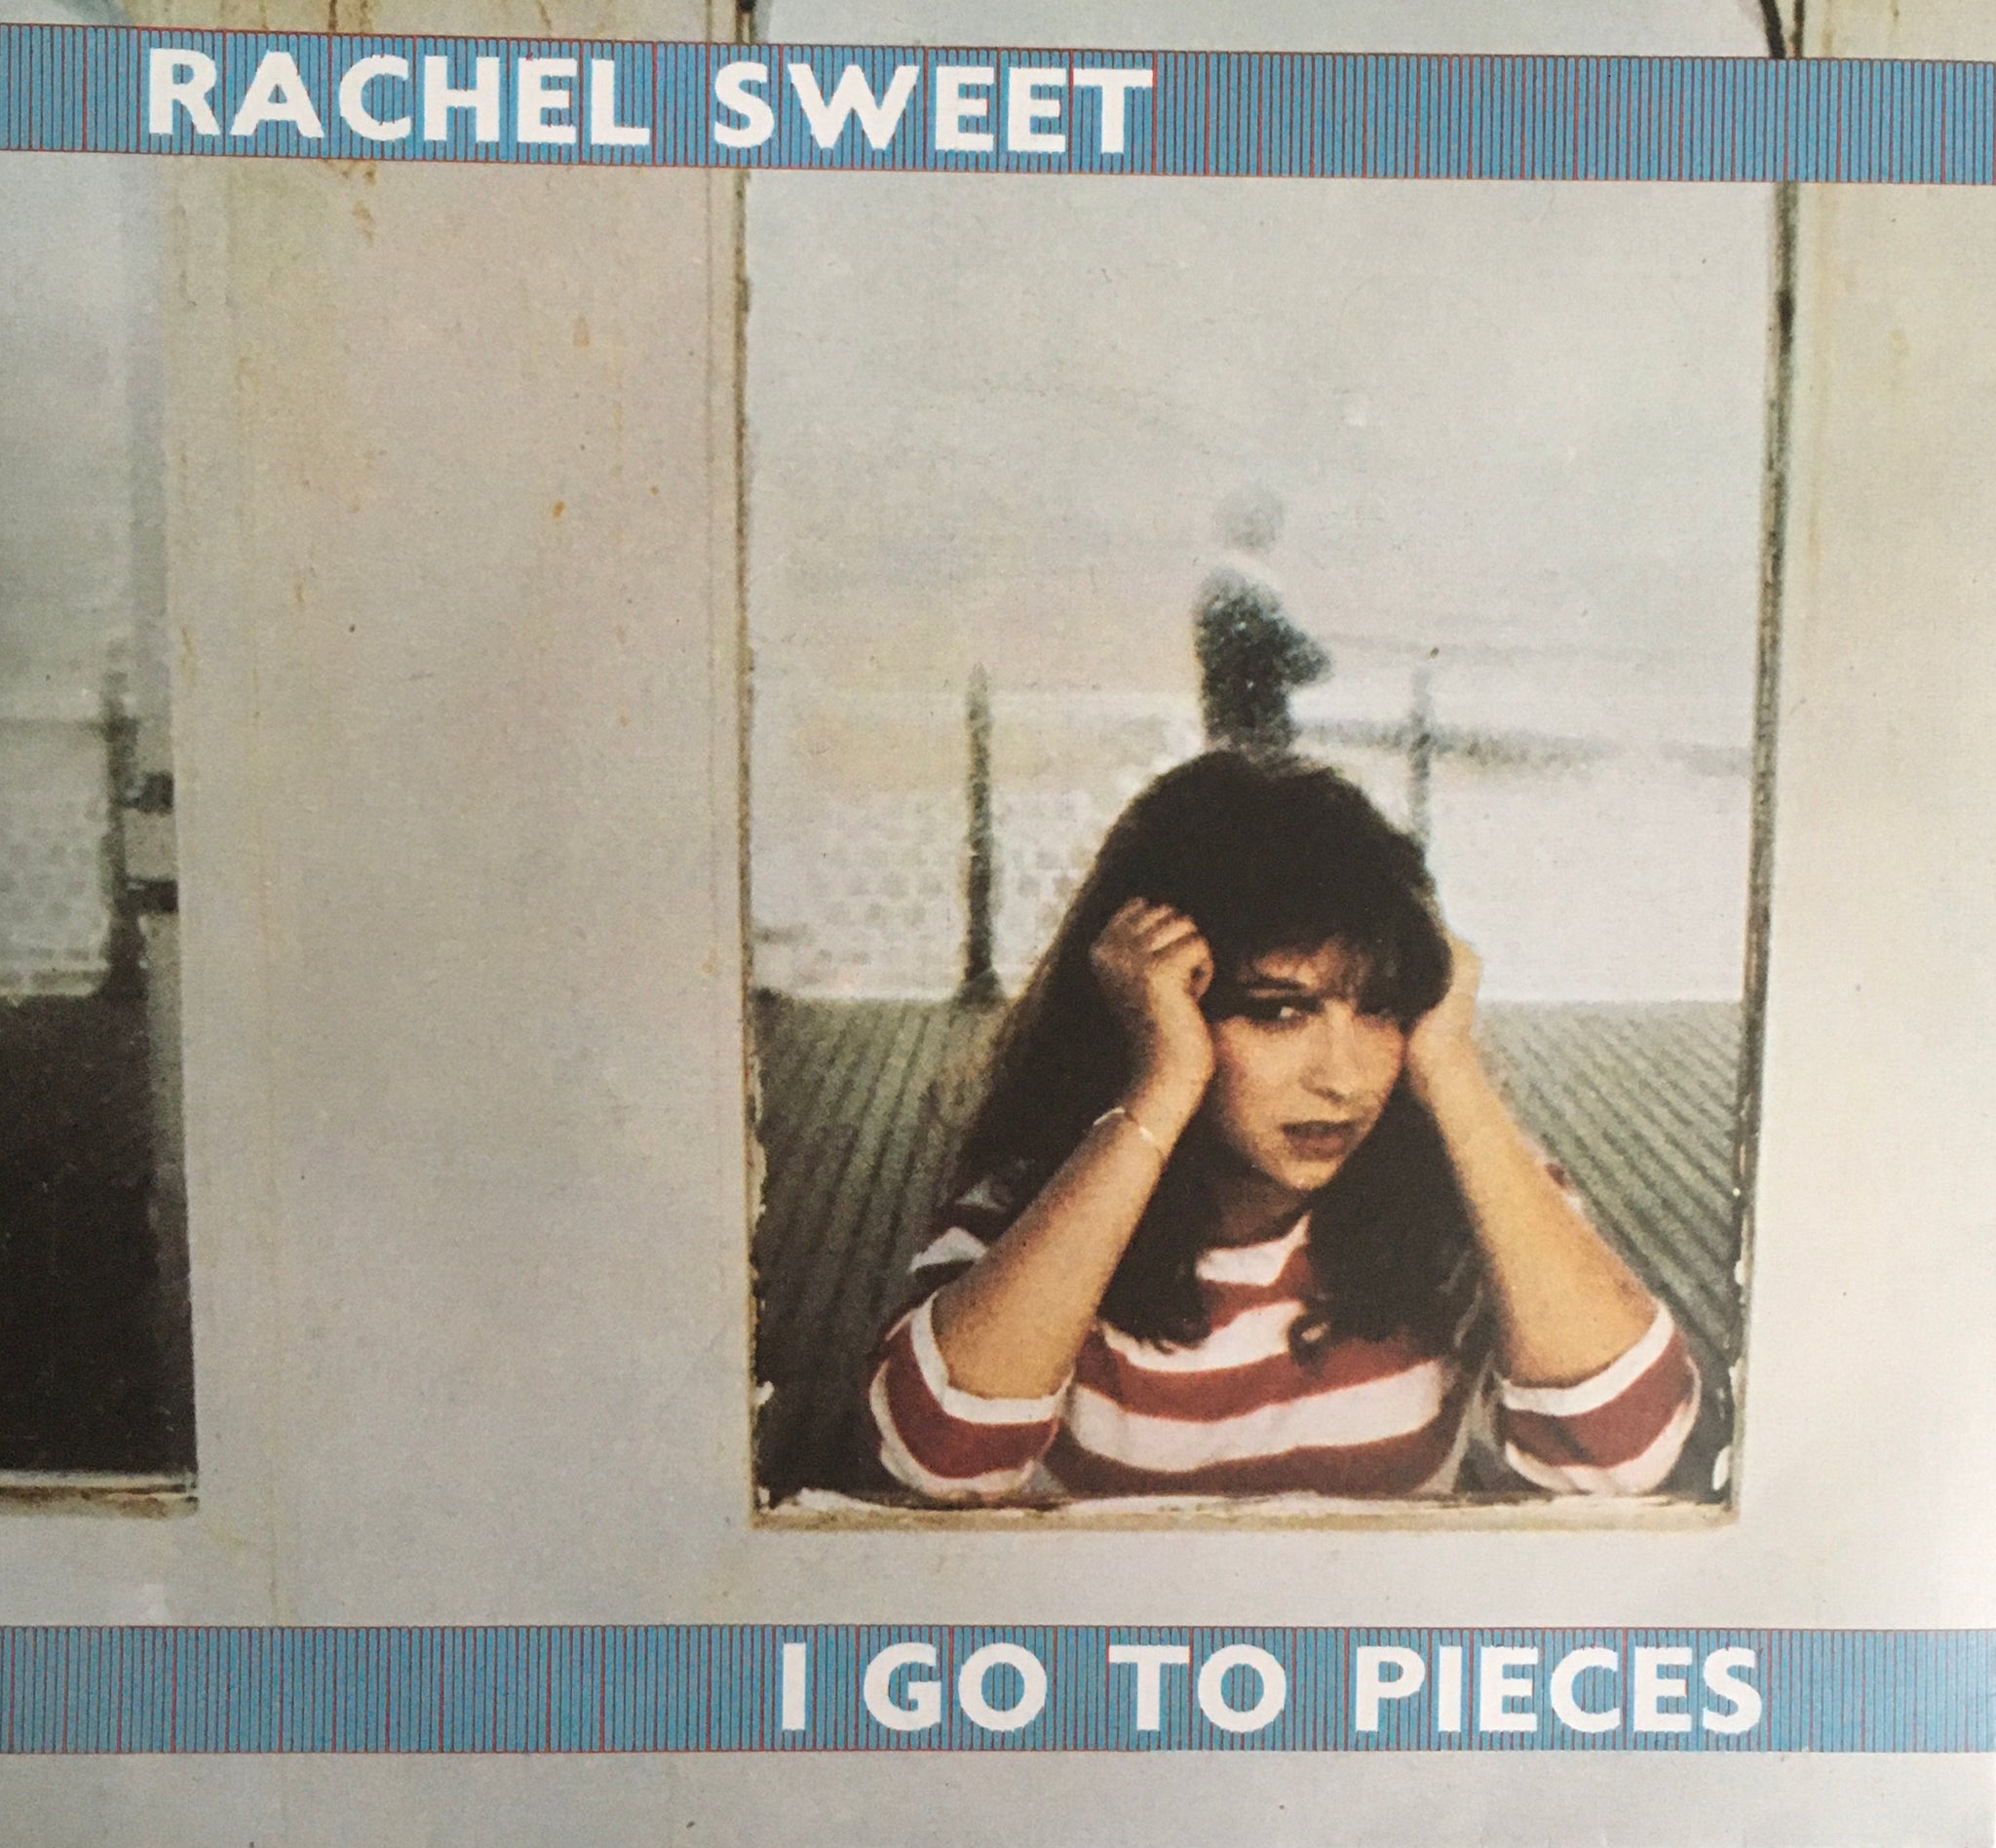 Rachel Sweet "I Go To Pieces" Single (1979)